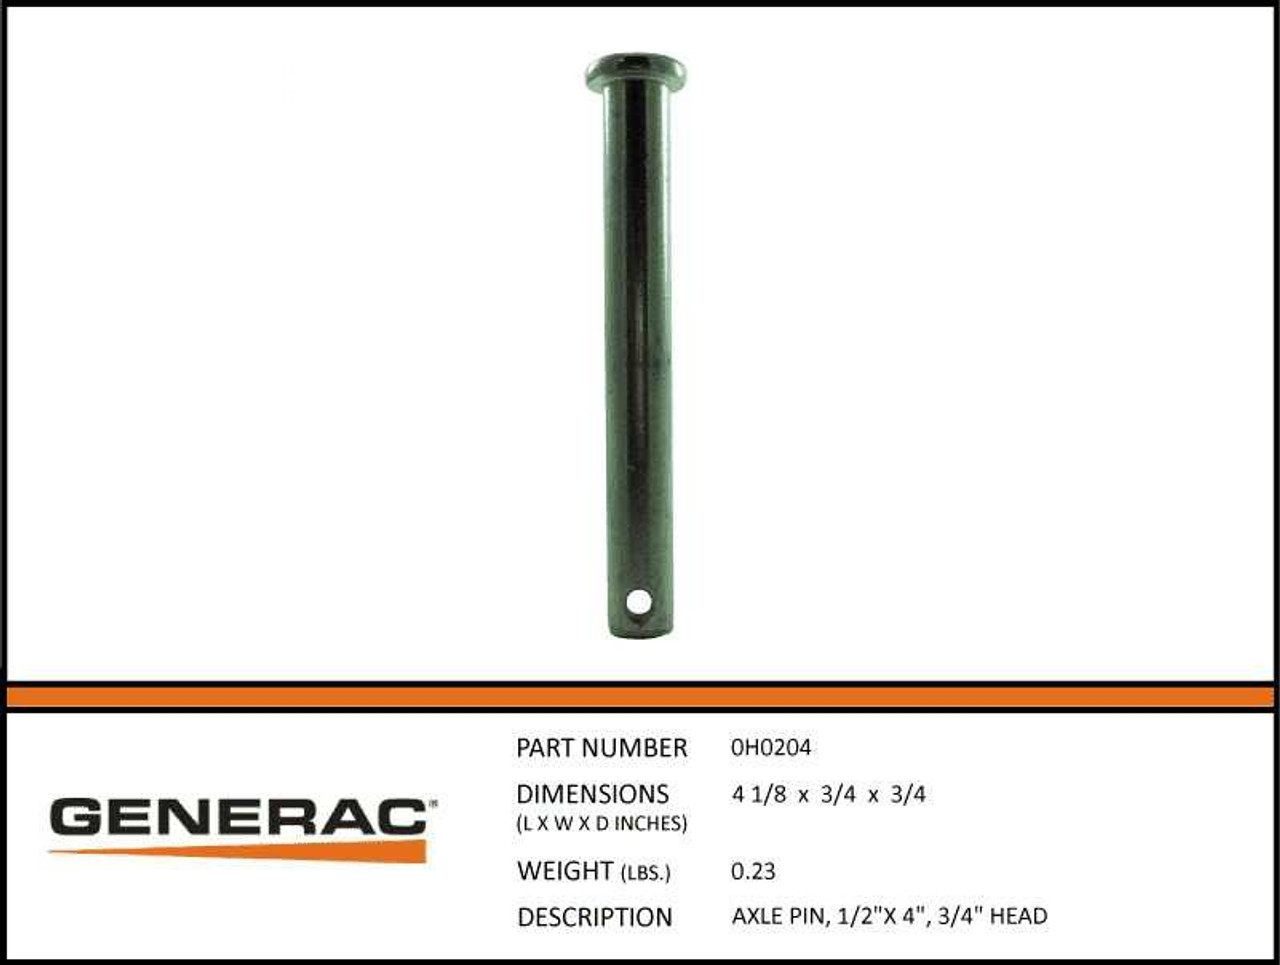 Generac 0H0204 Axle Pin